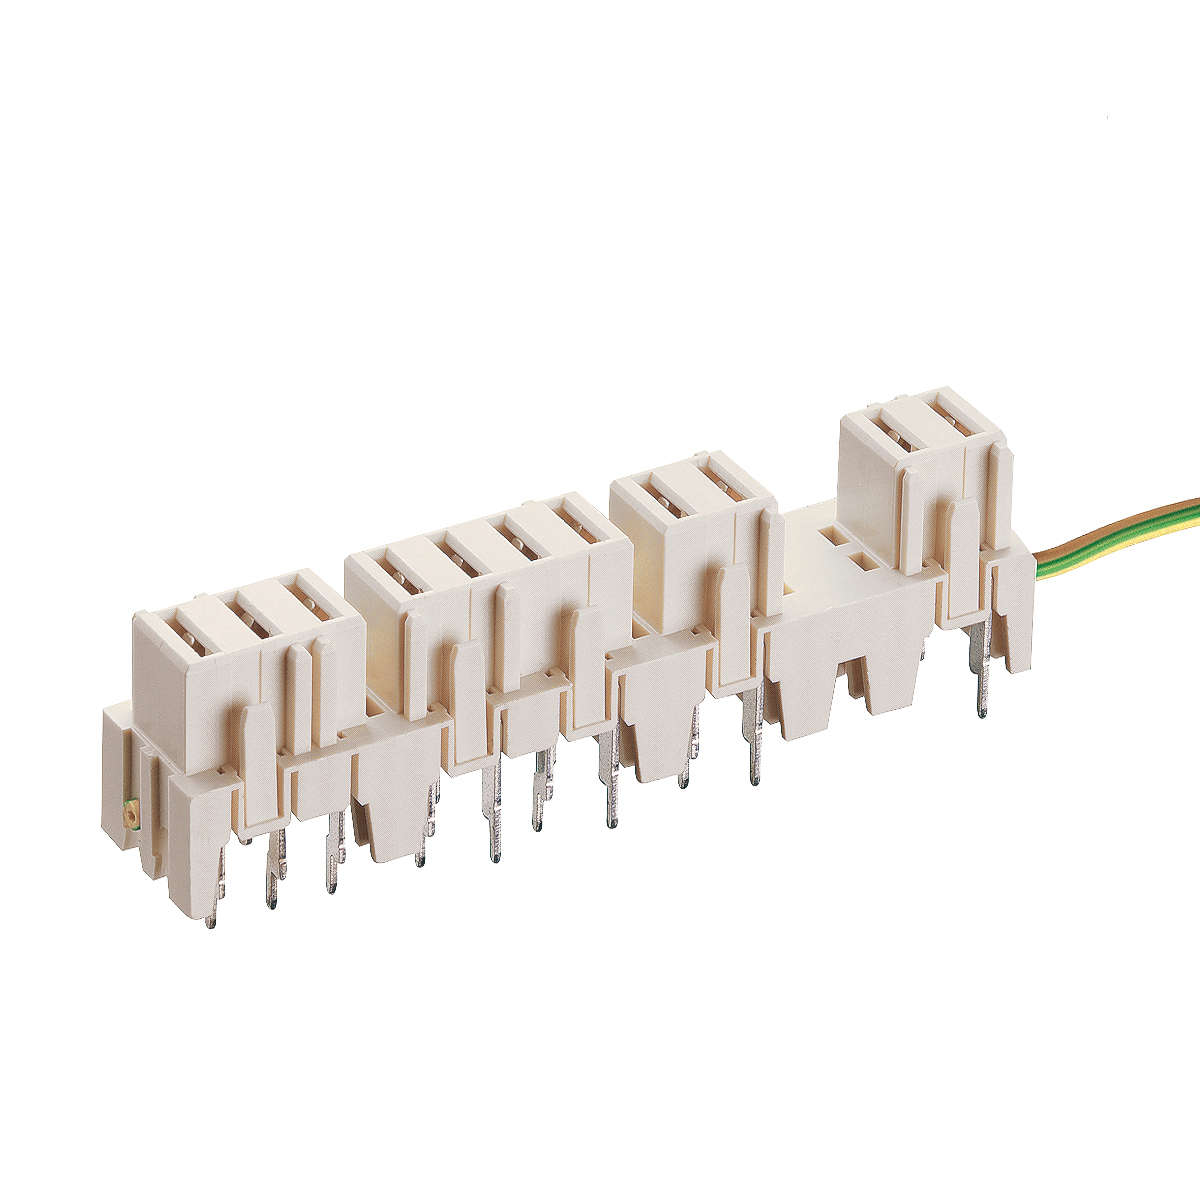 Lumberg: 3686 (Series 36 | RAST 5 connectors, pitch 5.0 mm)